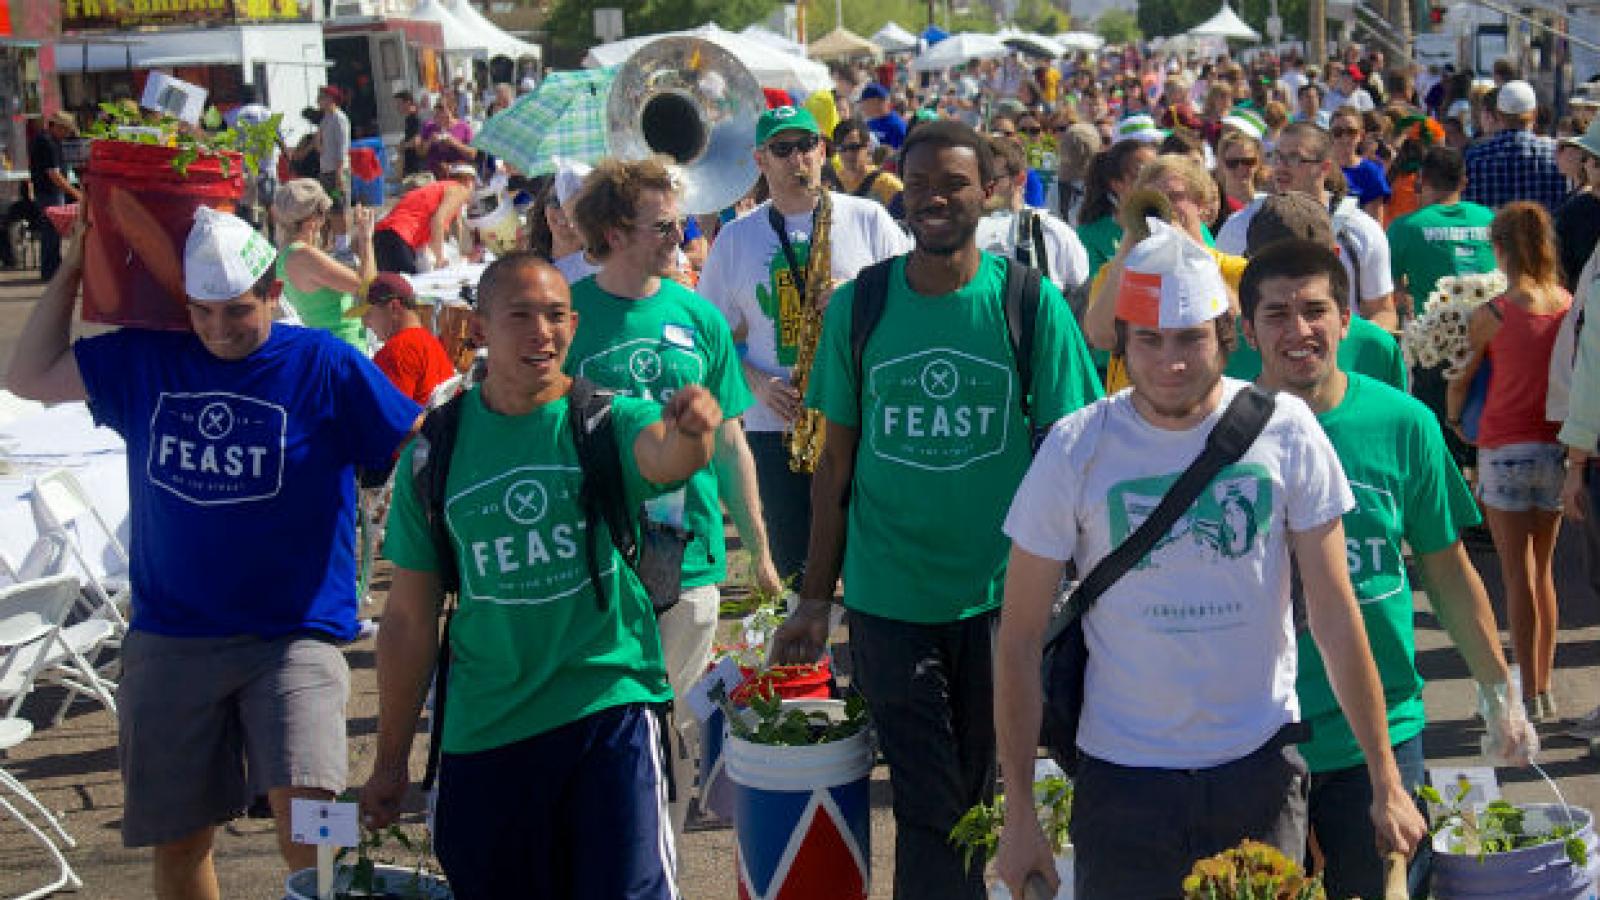 Six young men carry food through a street fair.